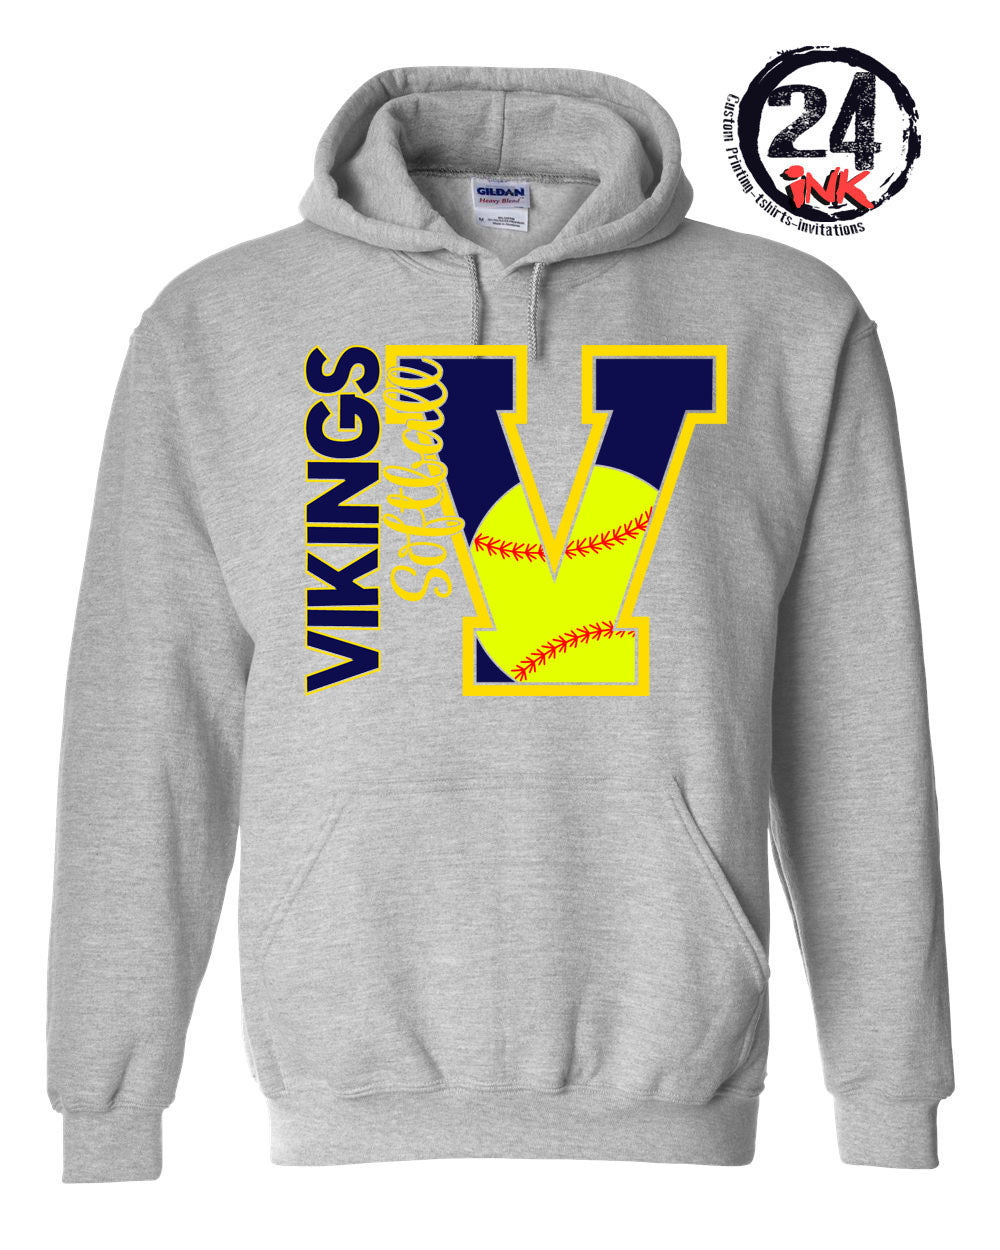 Softball Vikings Hooded Sweatshirt